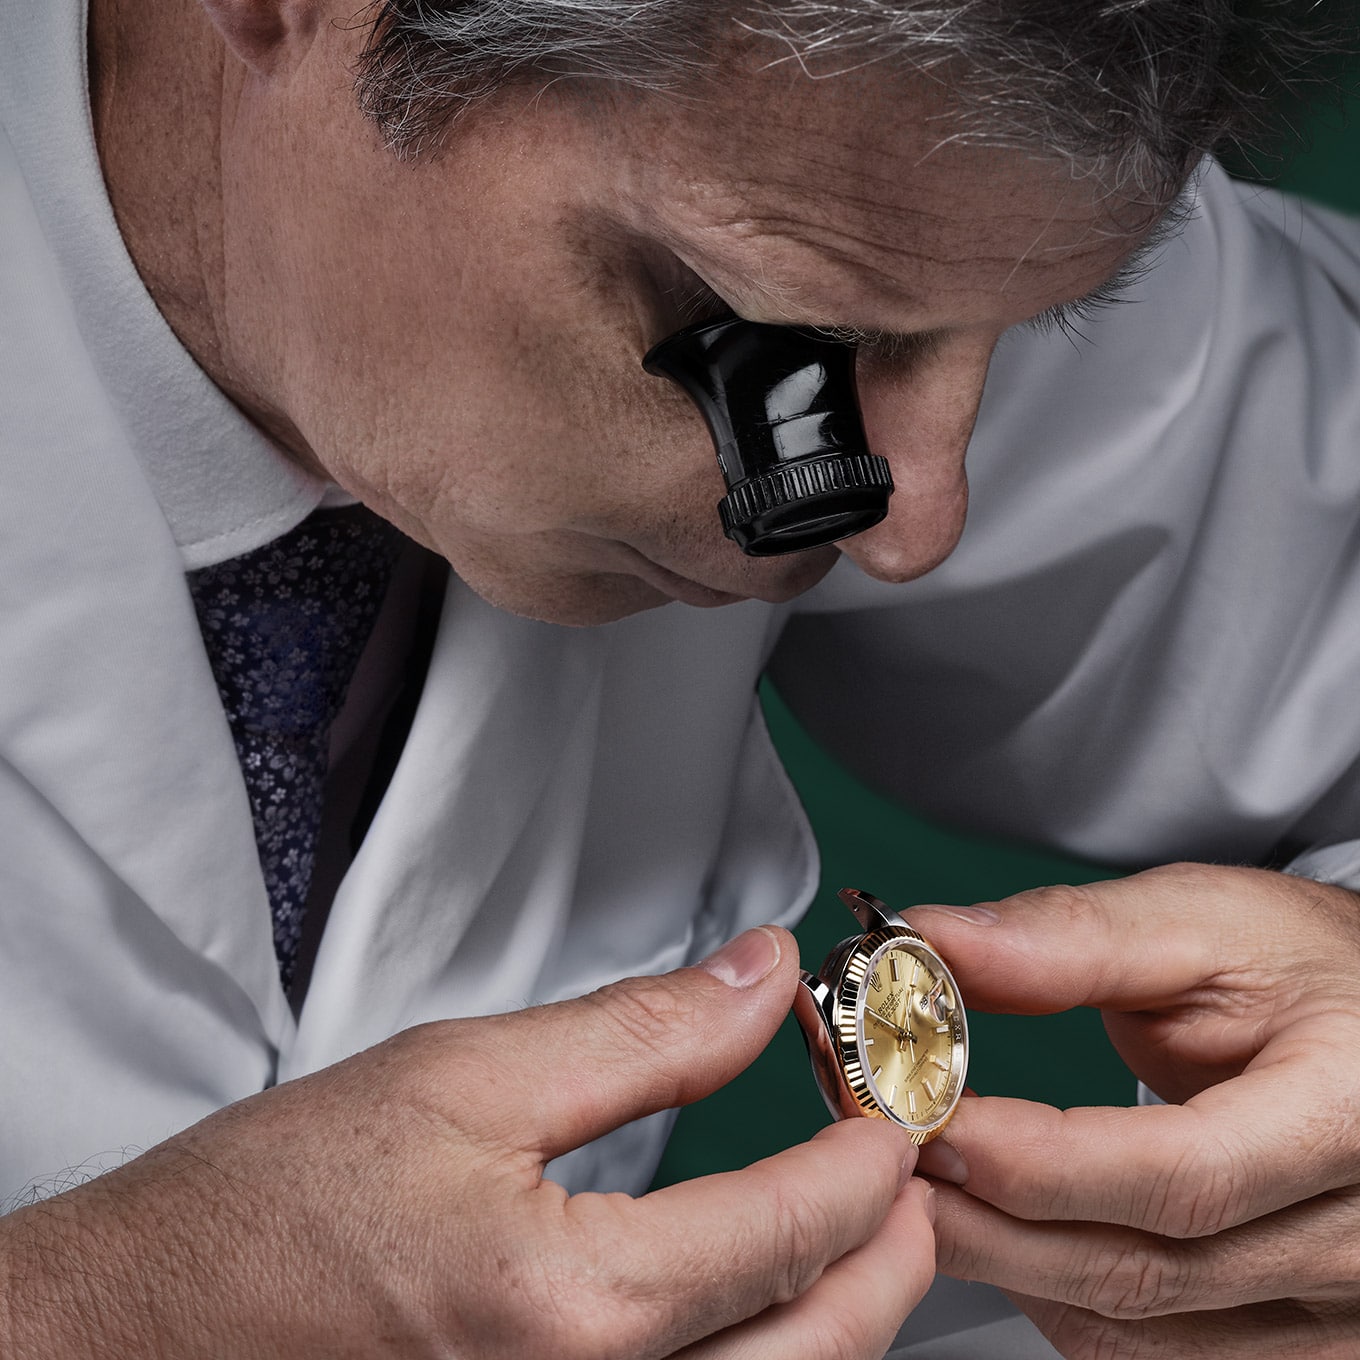 Rolex servicing procedure assessment of the watch.